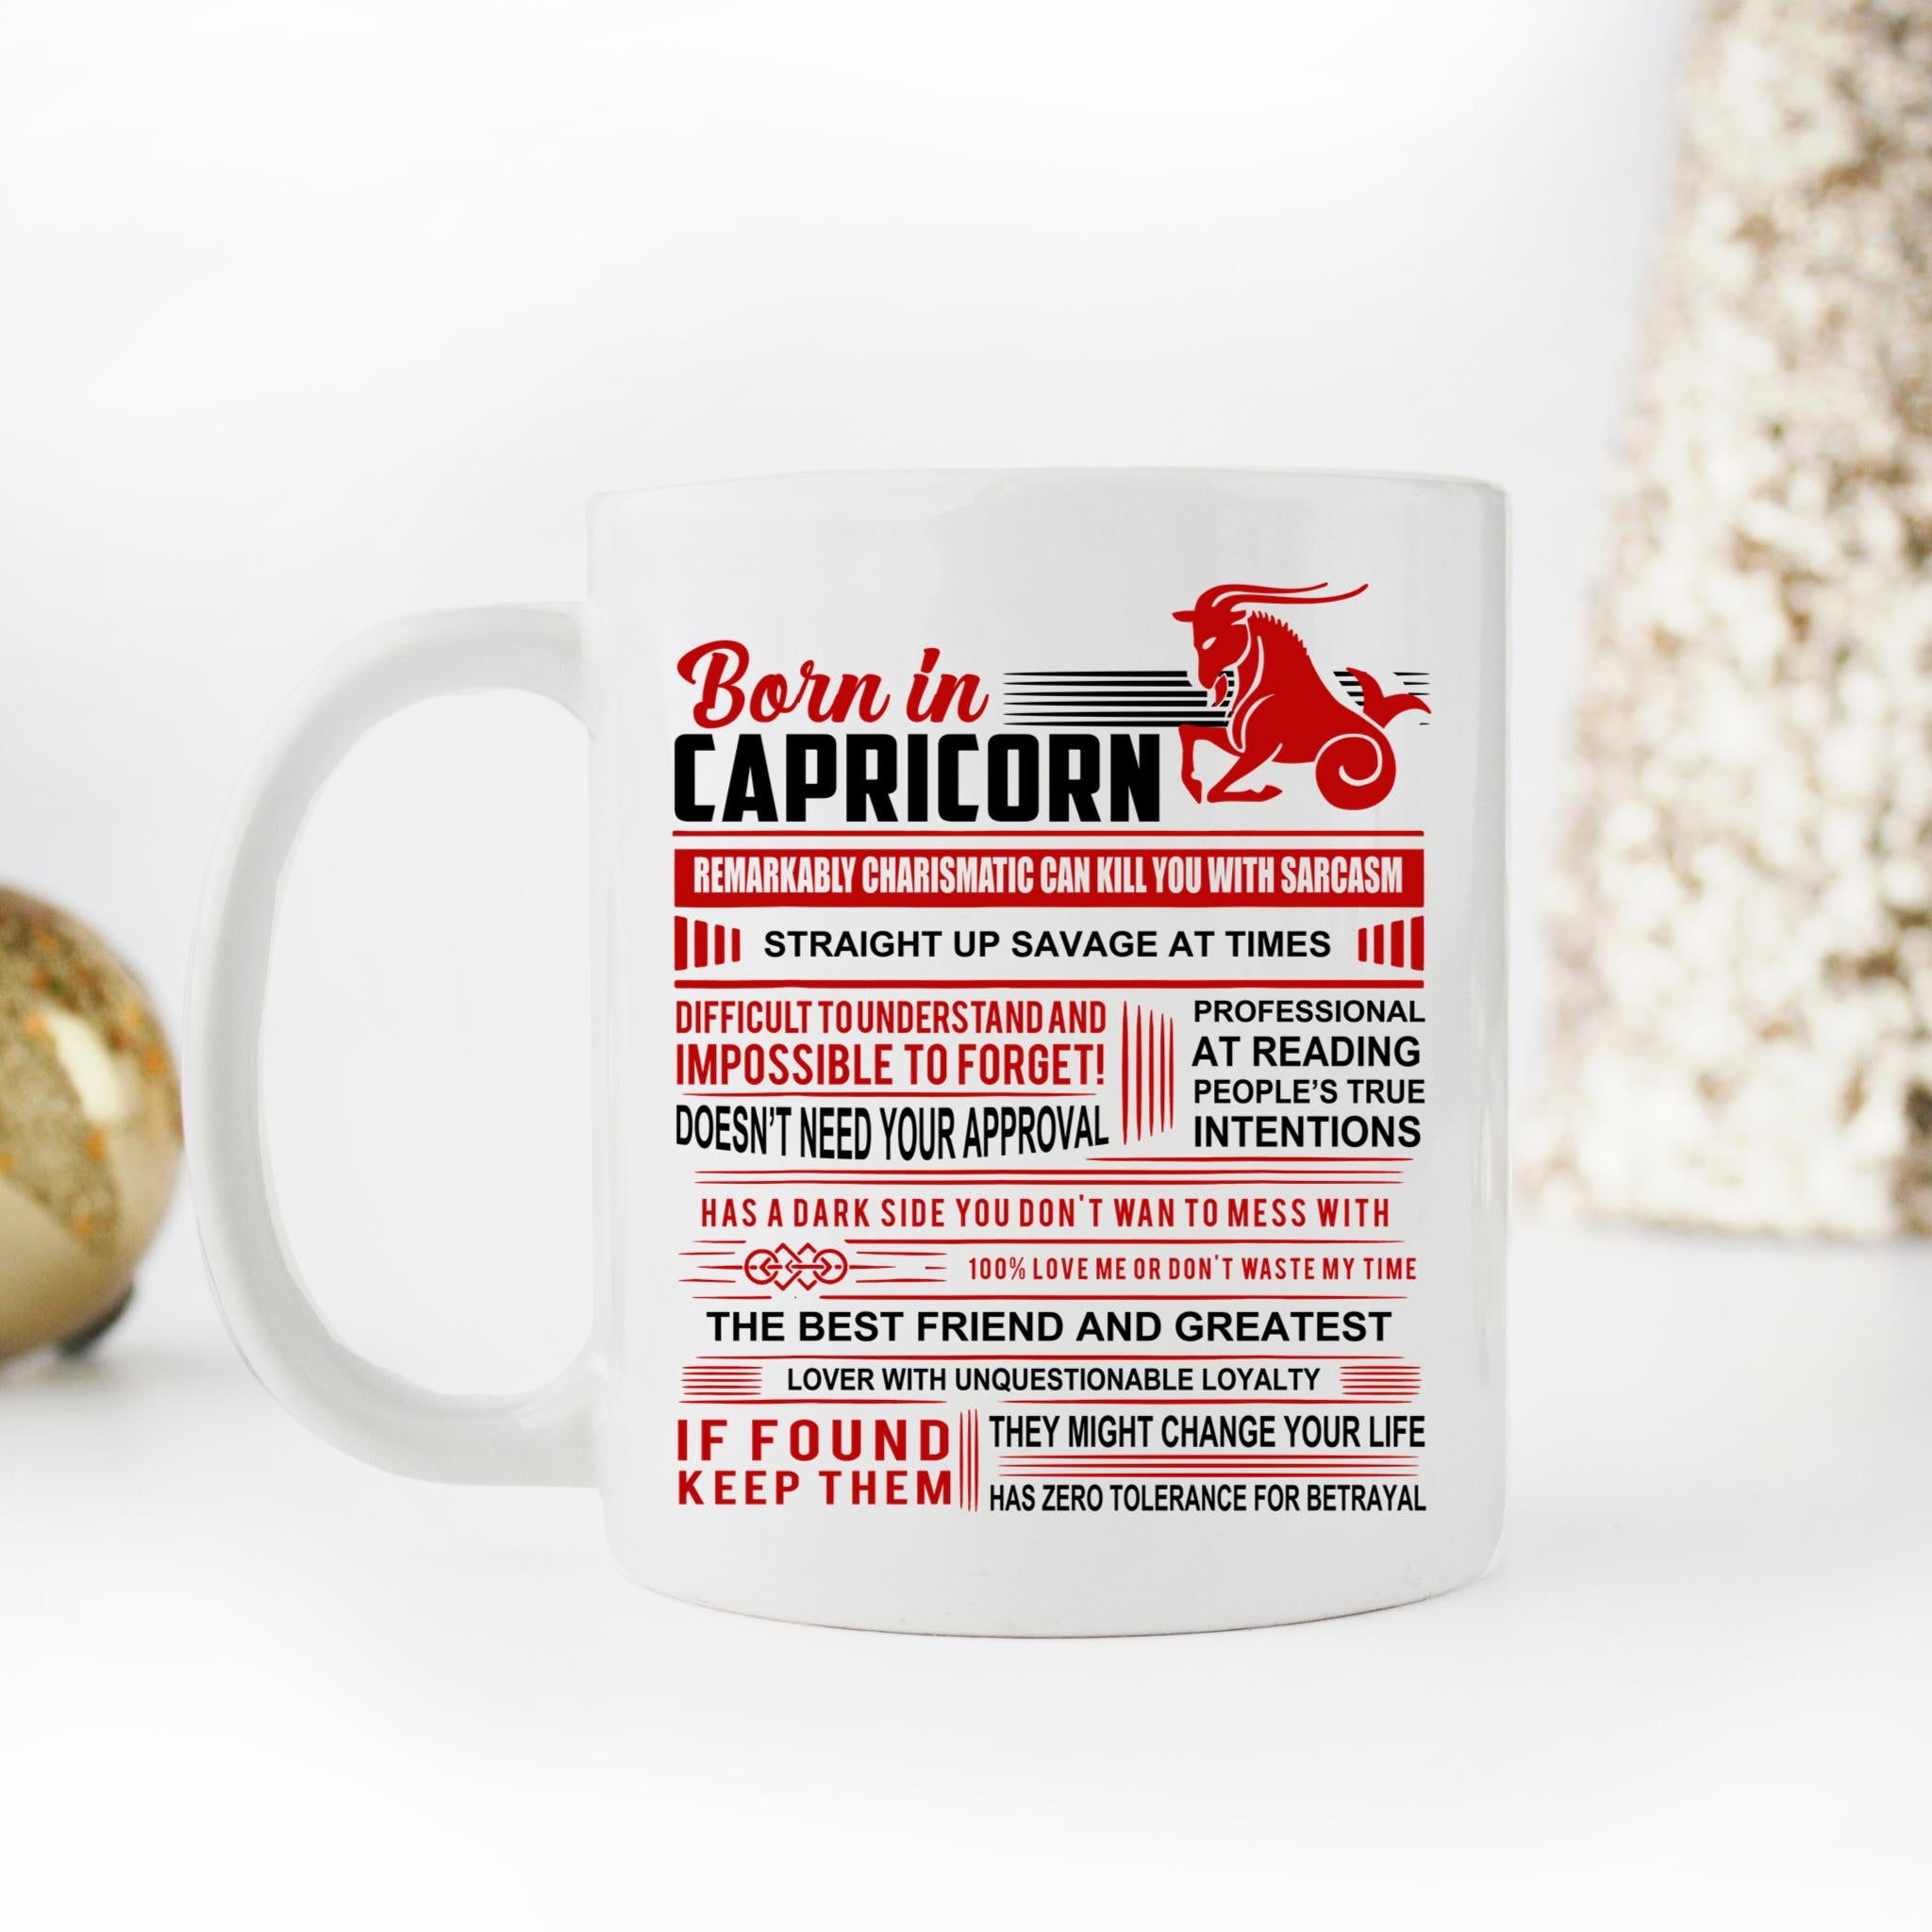 Skitongifts Coffee Mug Funny Ceramic Novelty NH261121-Born In Capricorn 90Vhqpo